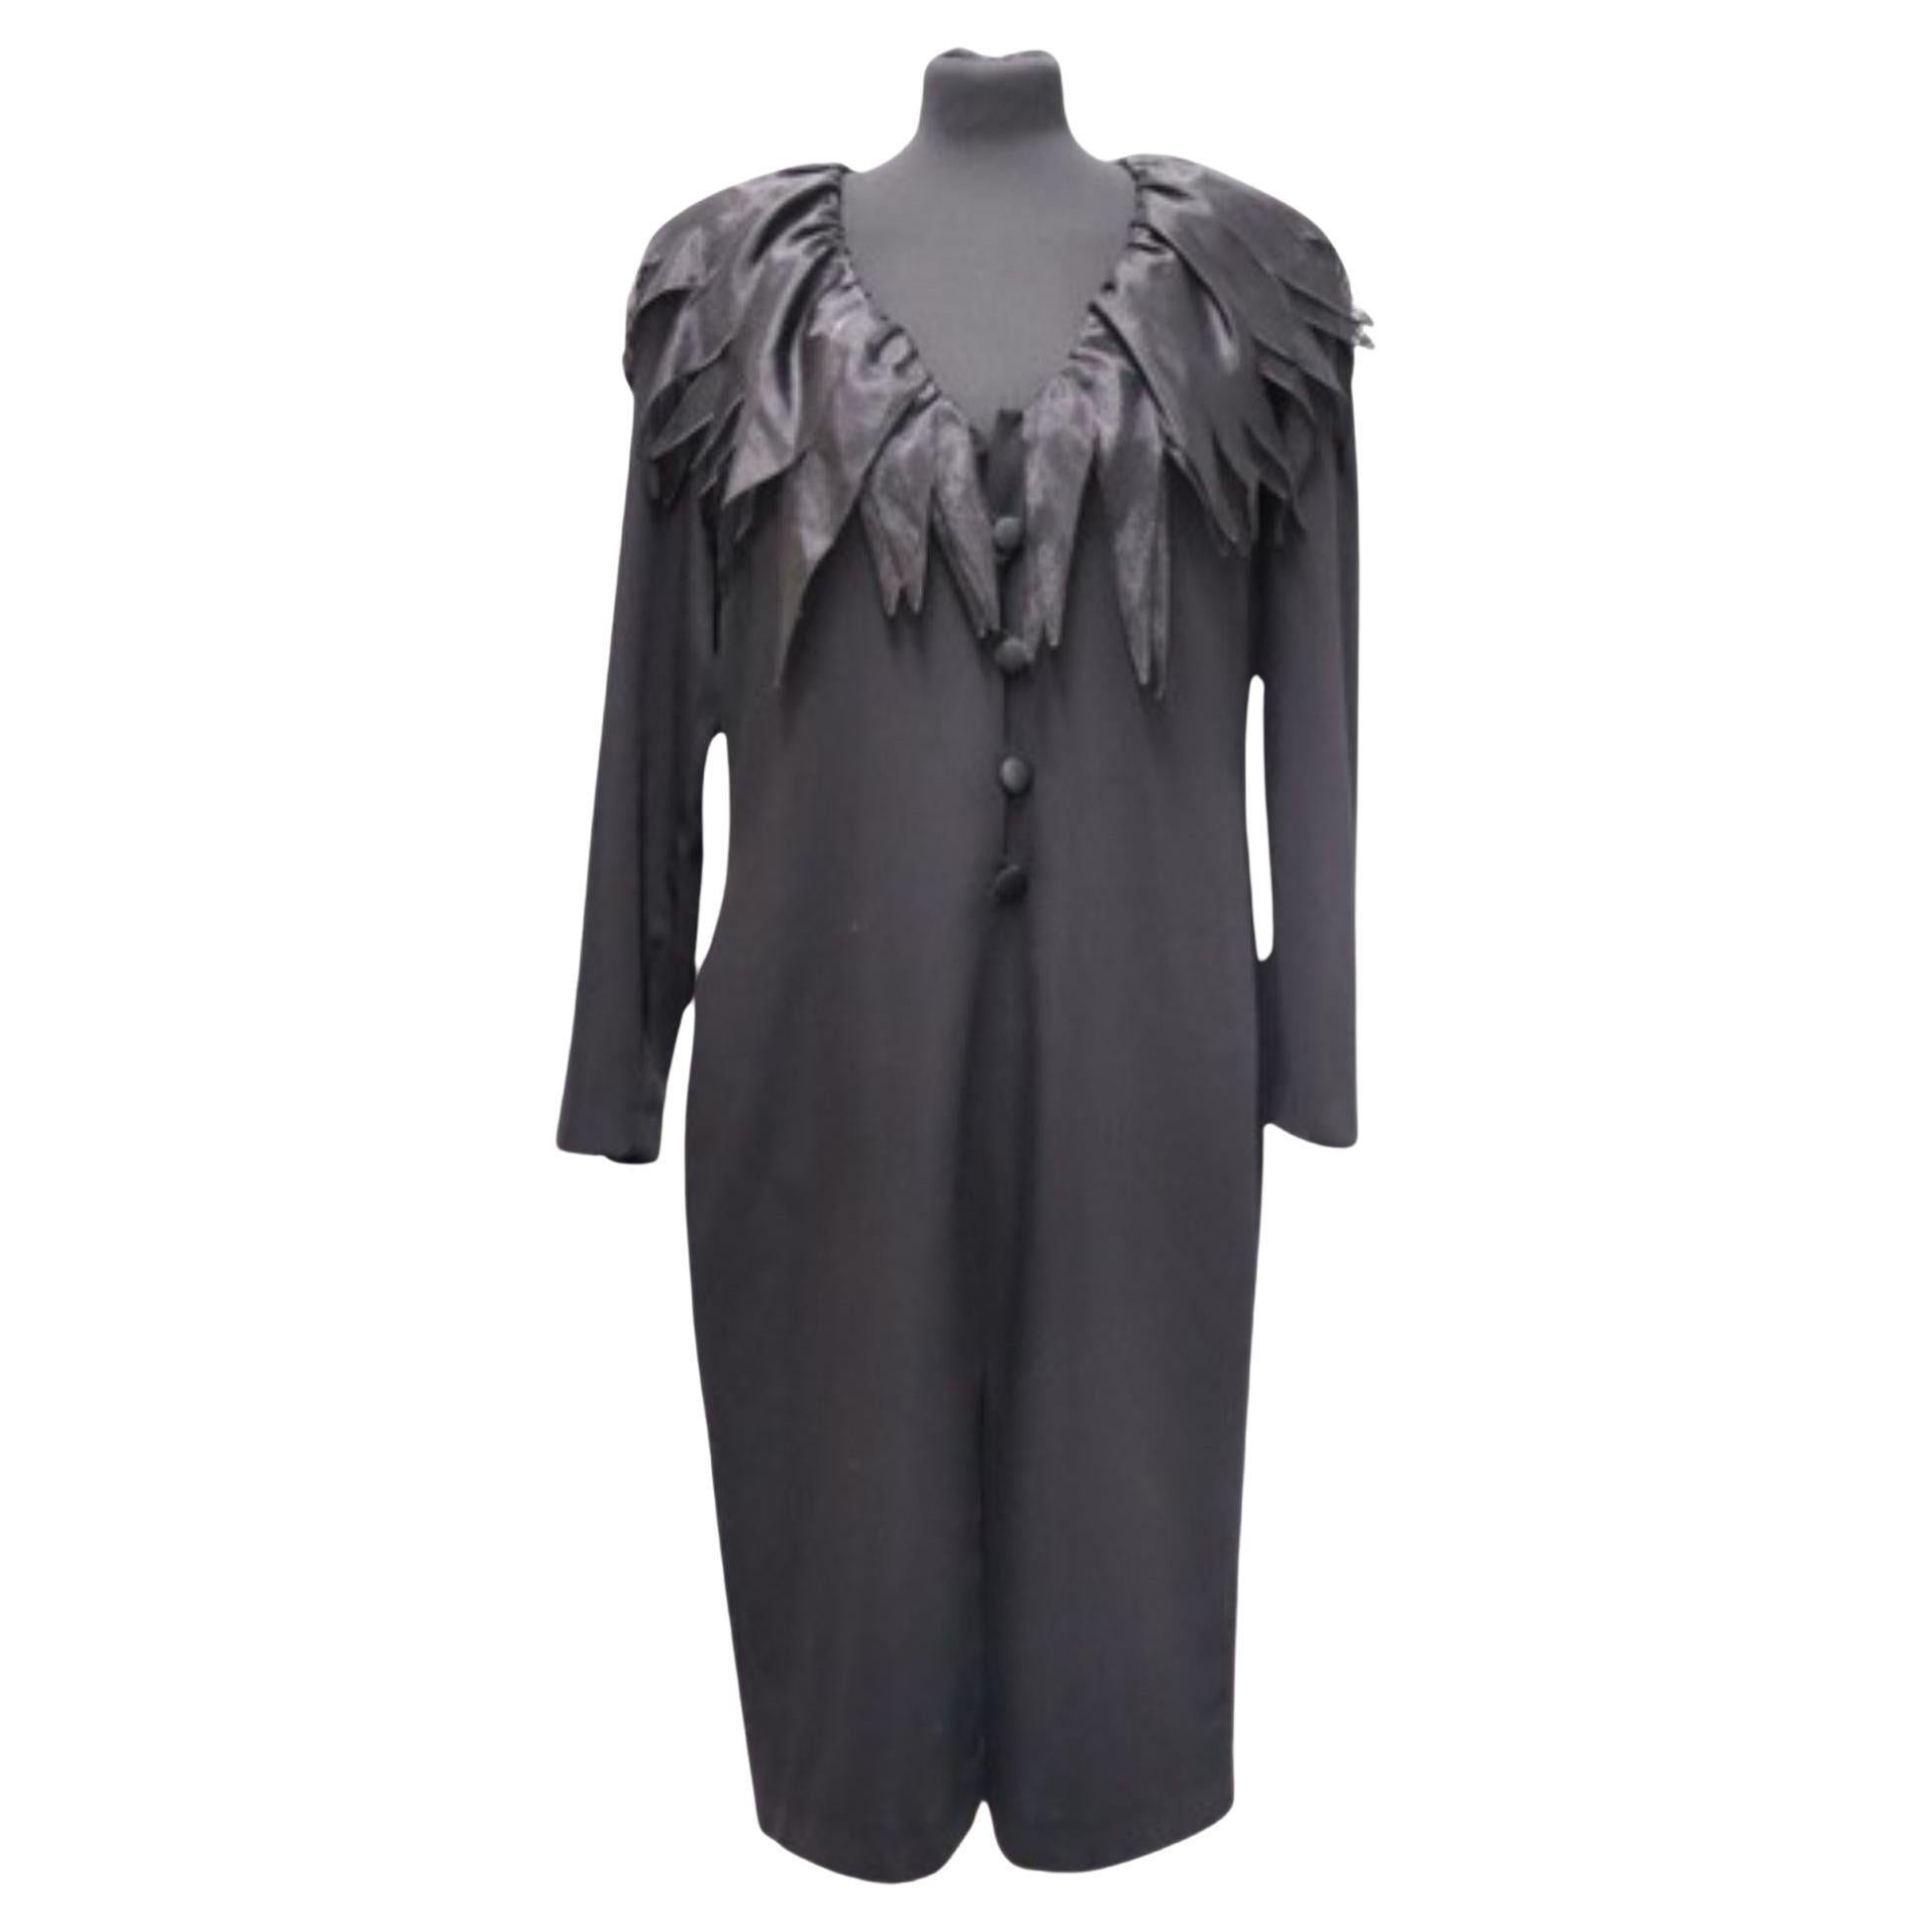 Vintage 90s Givenchy Chiffon Feathered Dress - EU 40